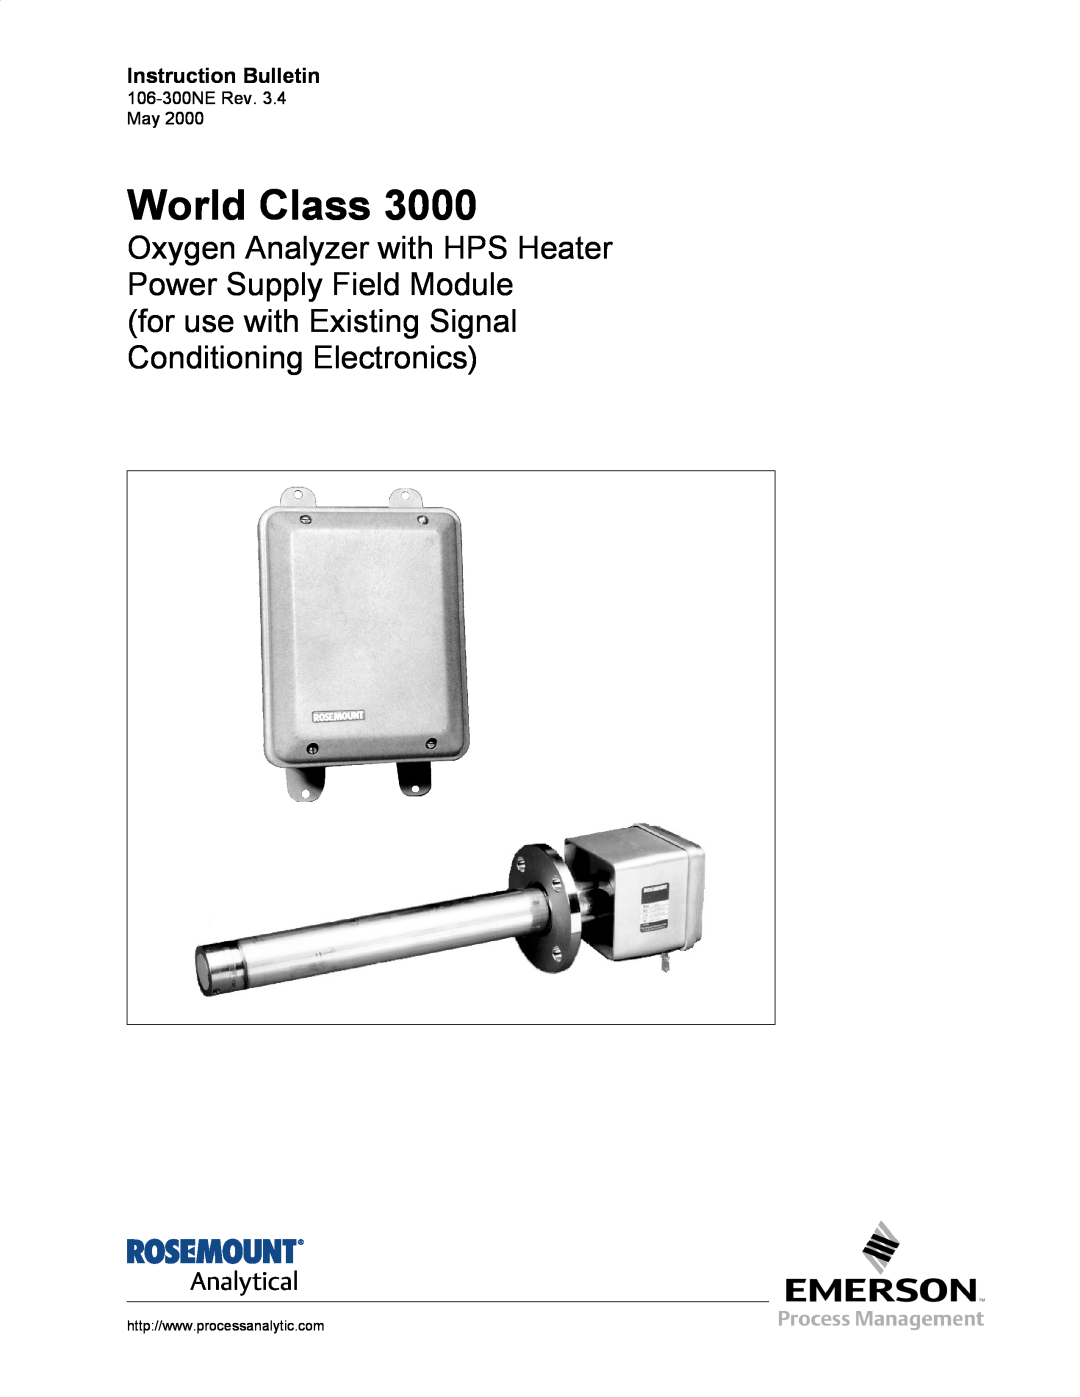 Emerson 3000 manual World Class, Instruction Bulletin 